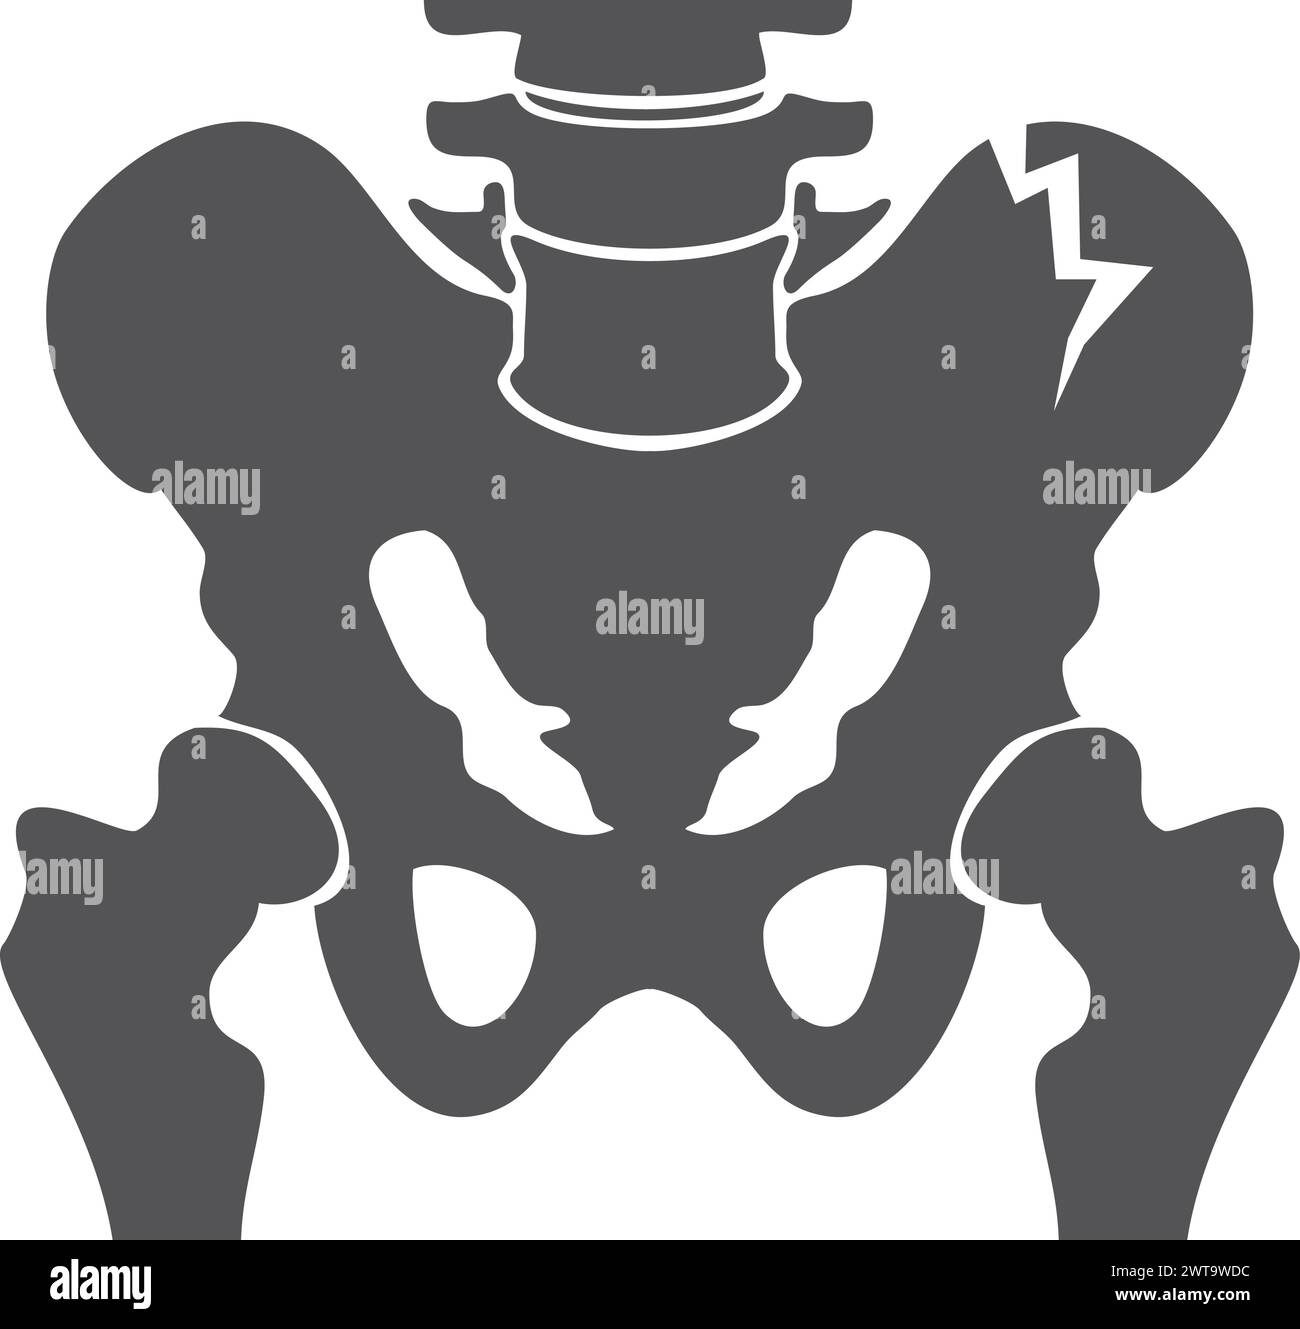 Human pelvis crack black icon. Injury illustration Stock Vector